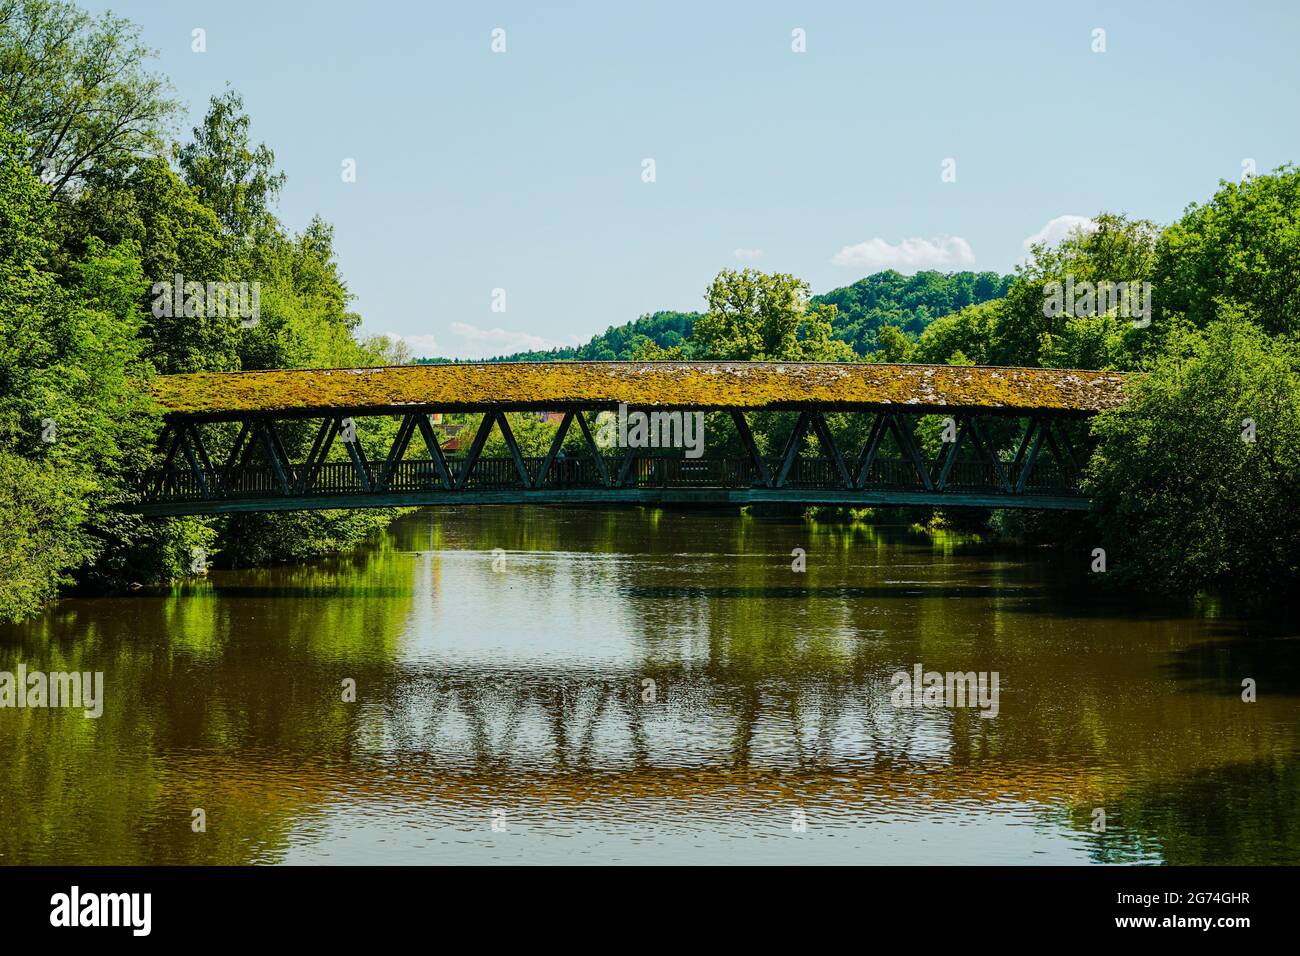 Sebastiani Steg bridge over the Loisach river in Wolfratshausen, Upper Bavaria. Stock Photo